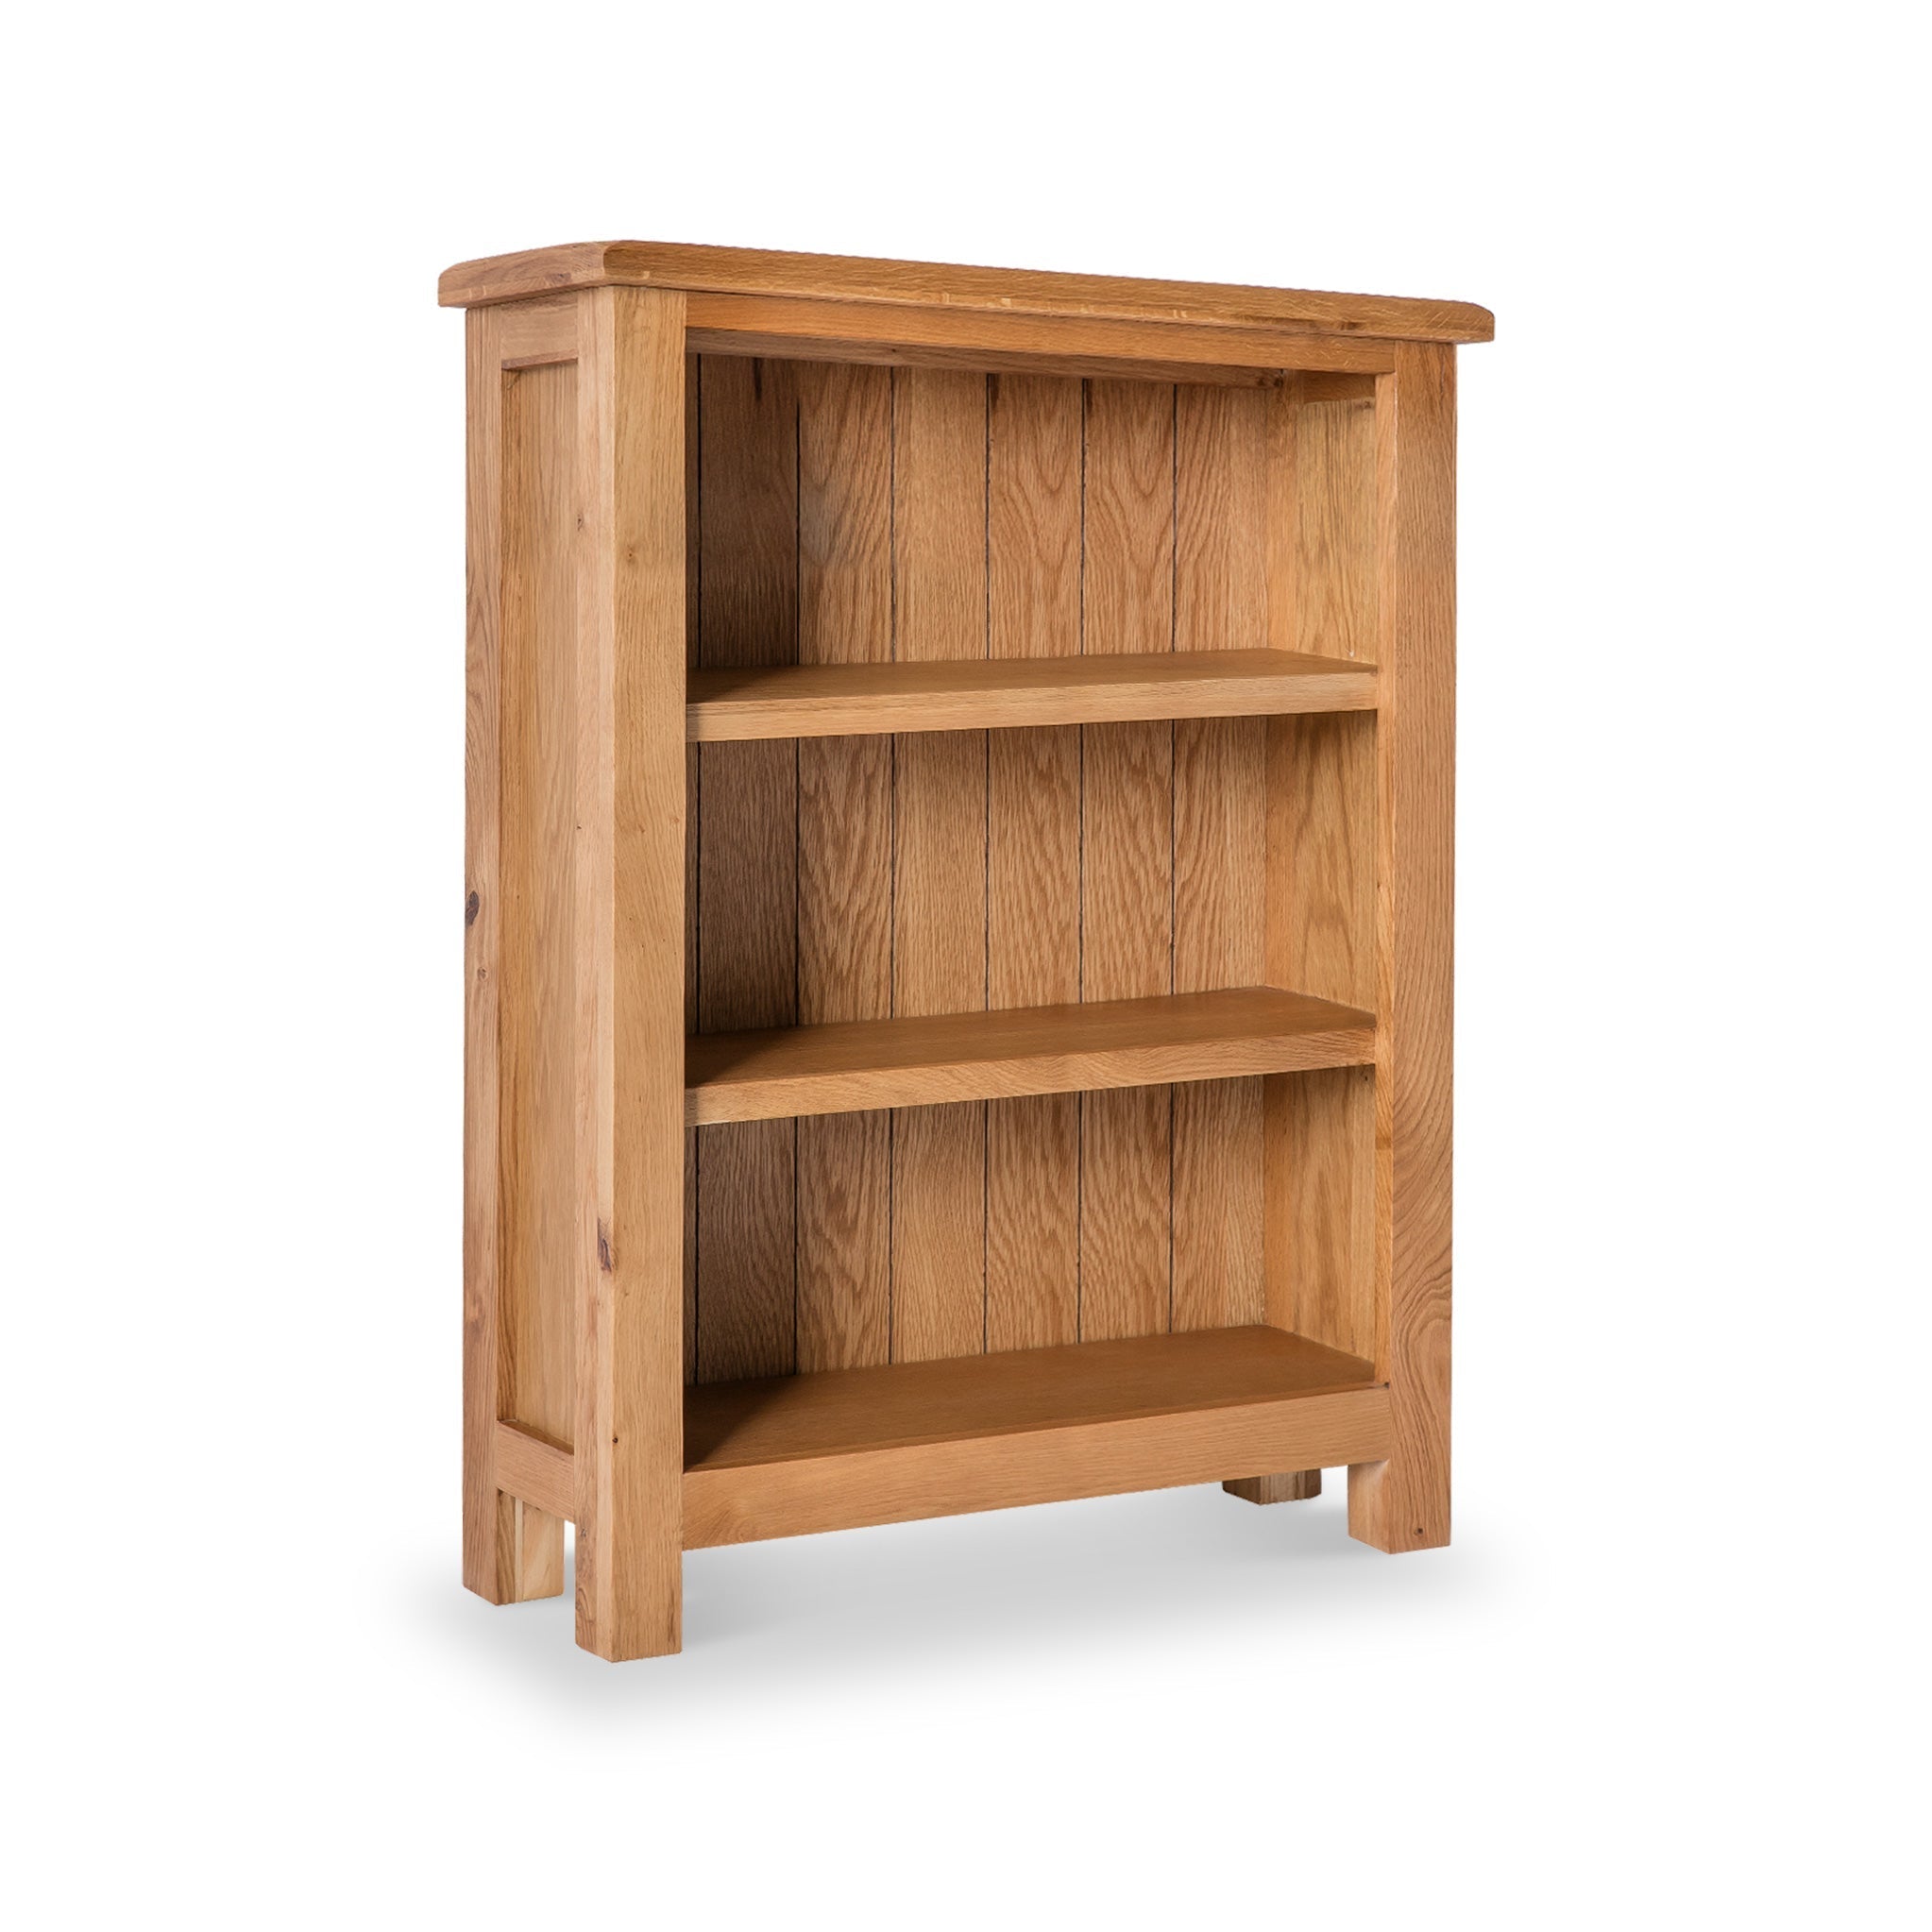 Surrey Oak Small Bookcase Solid Wood Rustic Waxed Oak Roseland